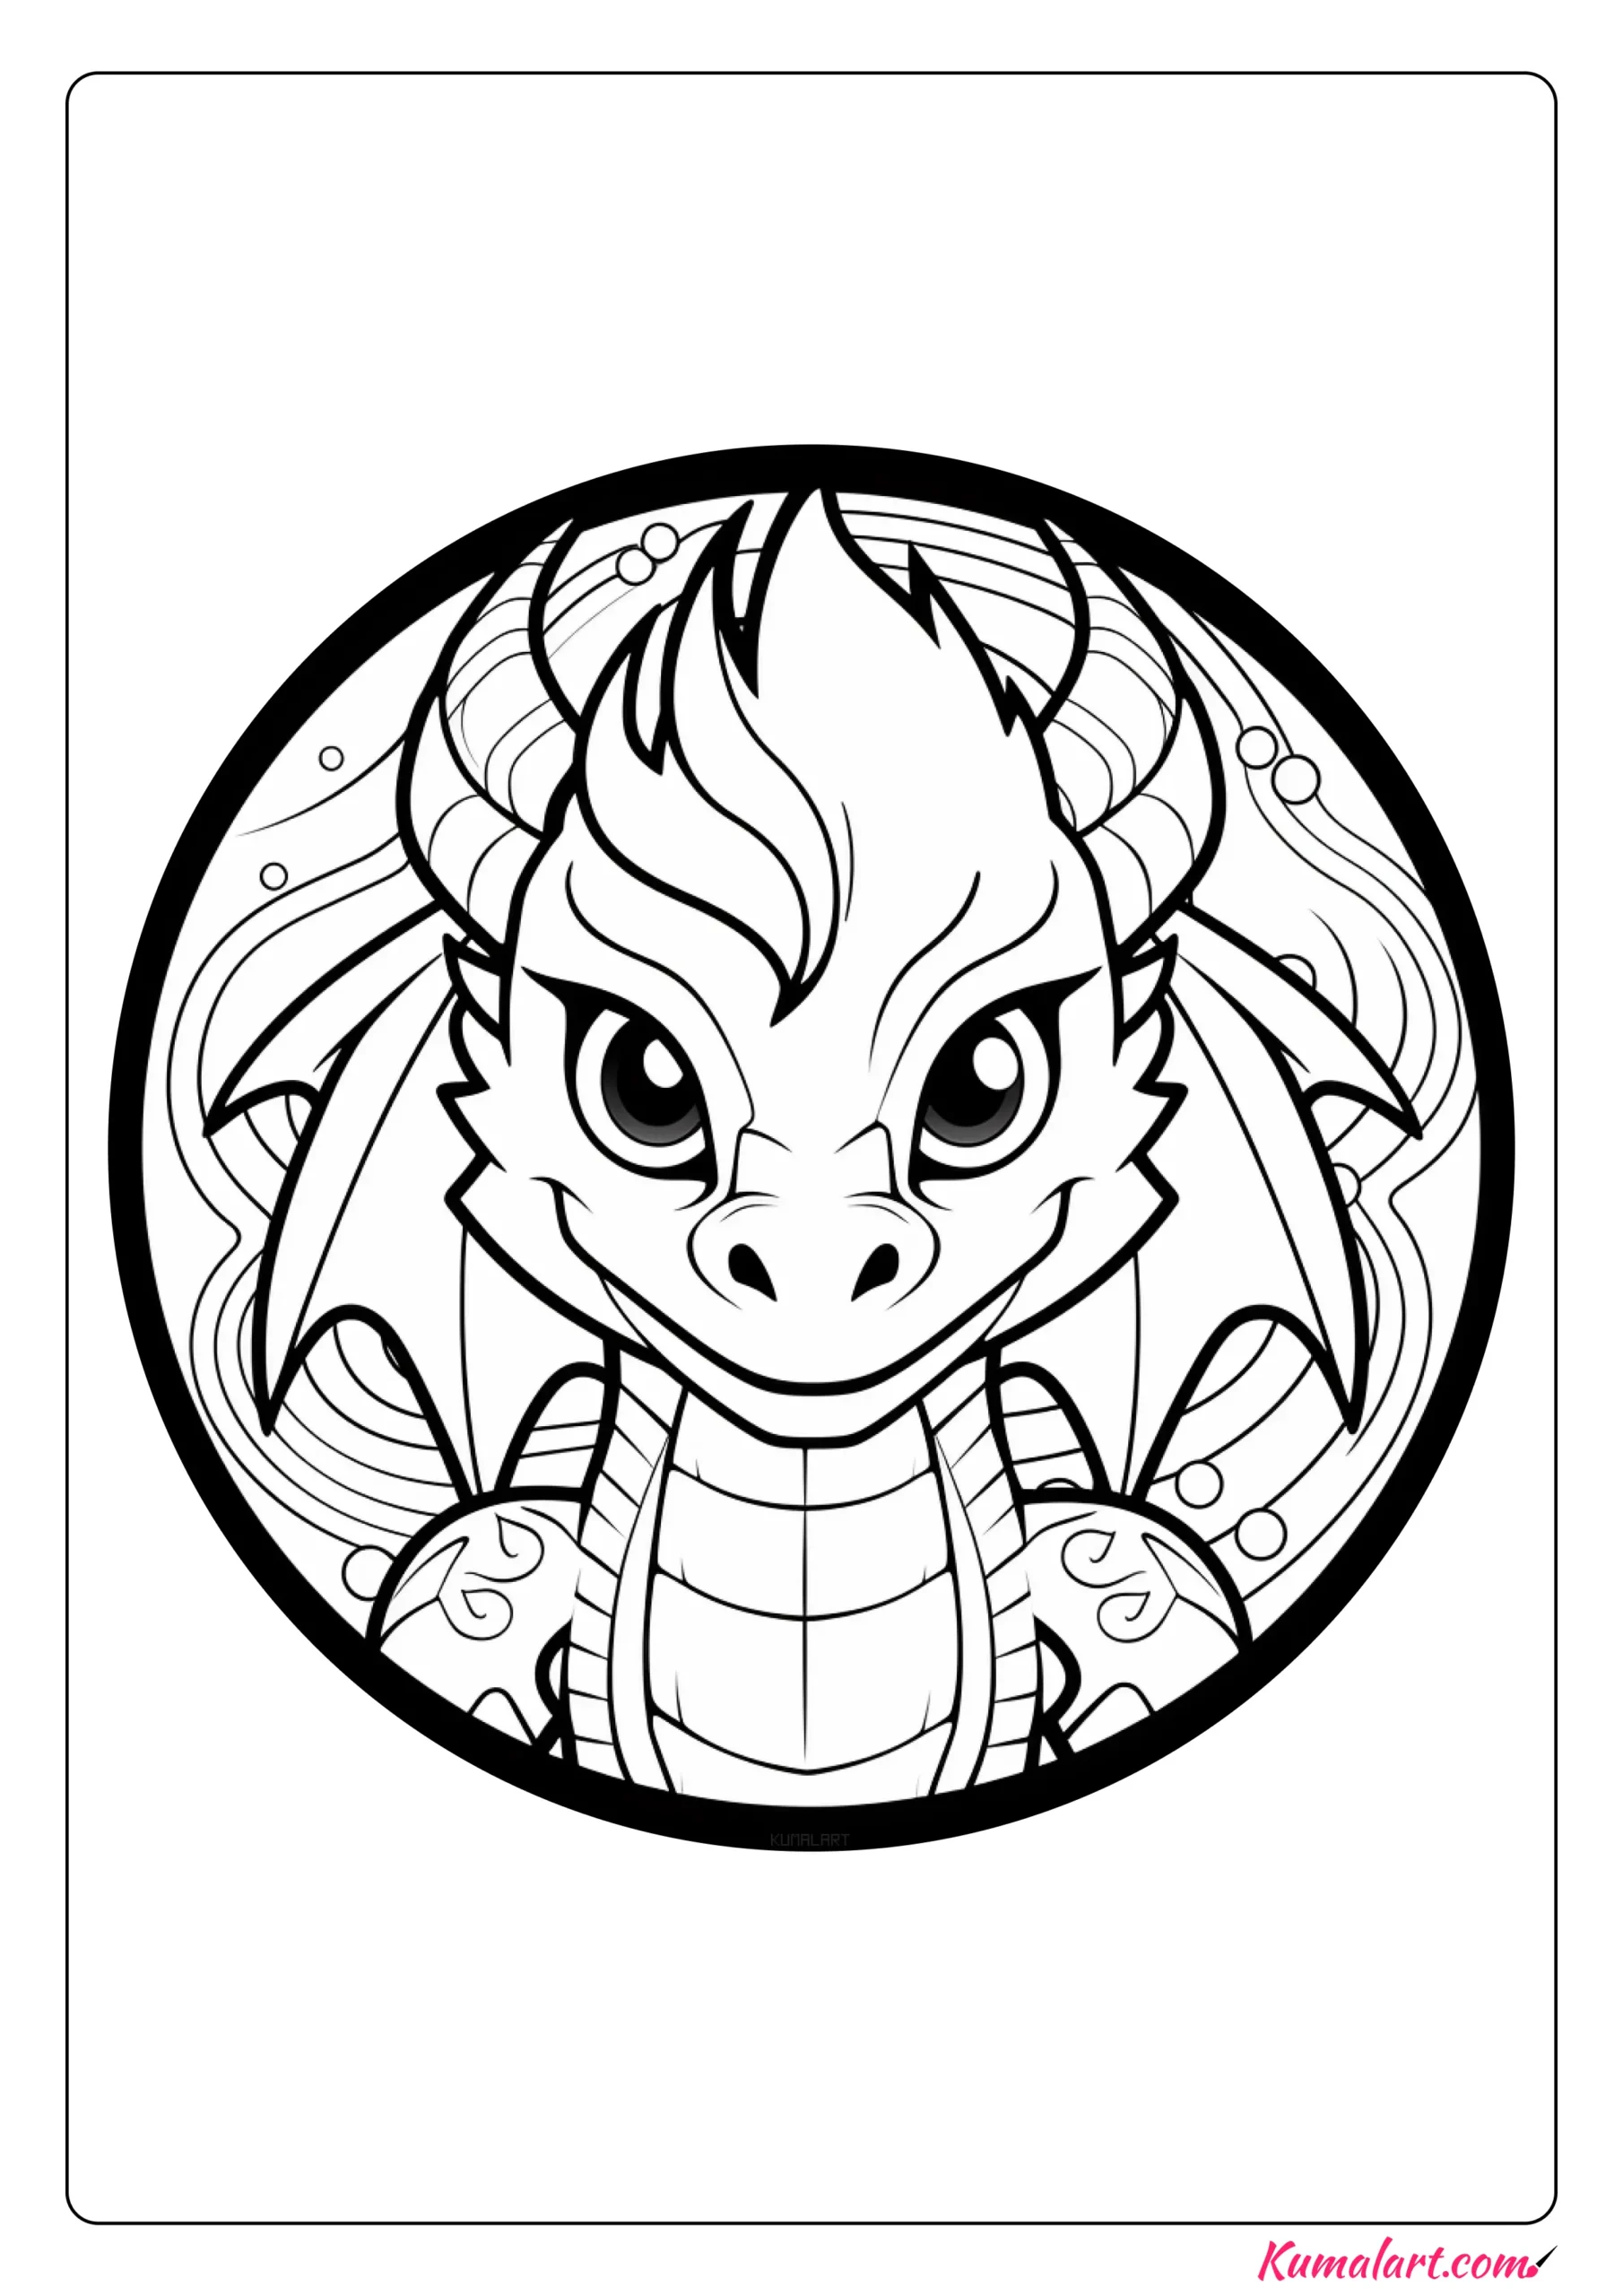 Oscar The Dragon Coloring Page (Printable A4 Page)